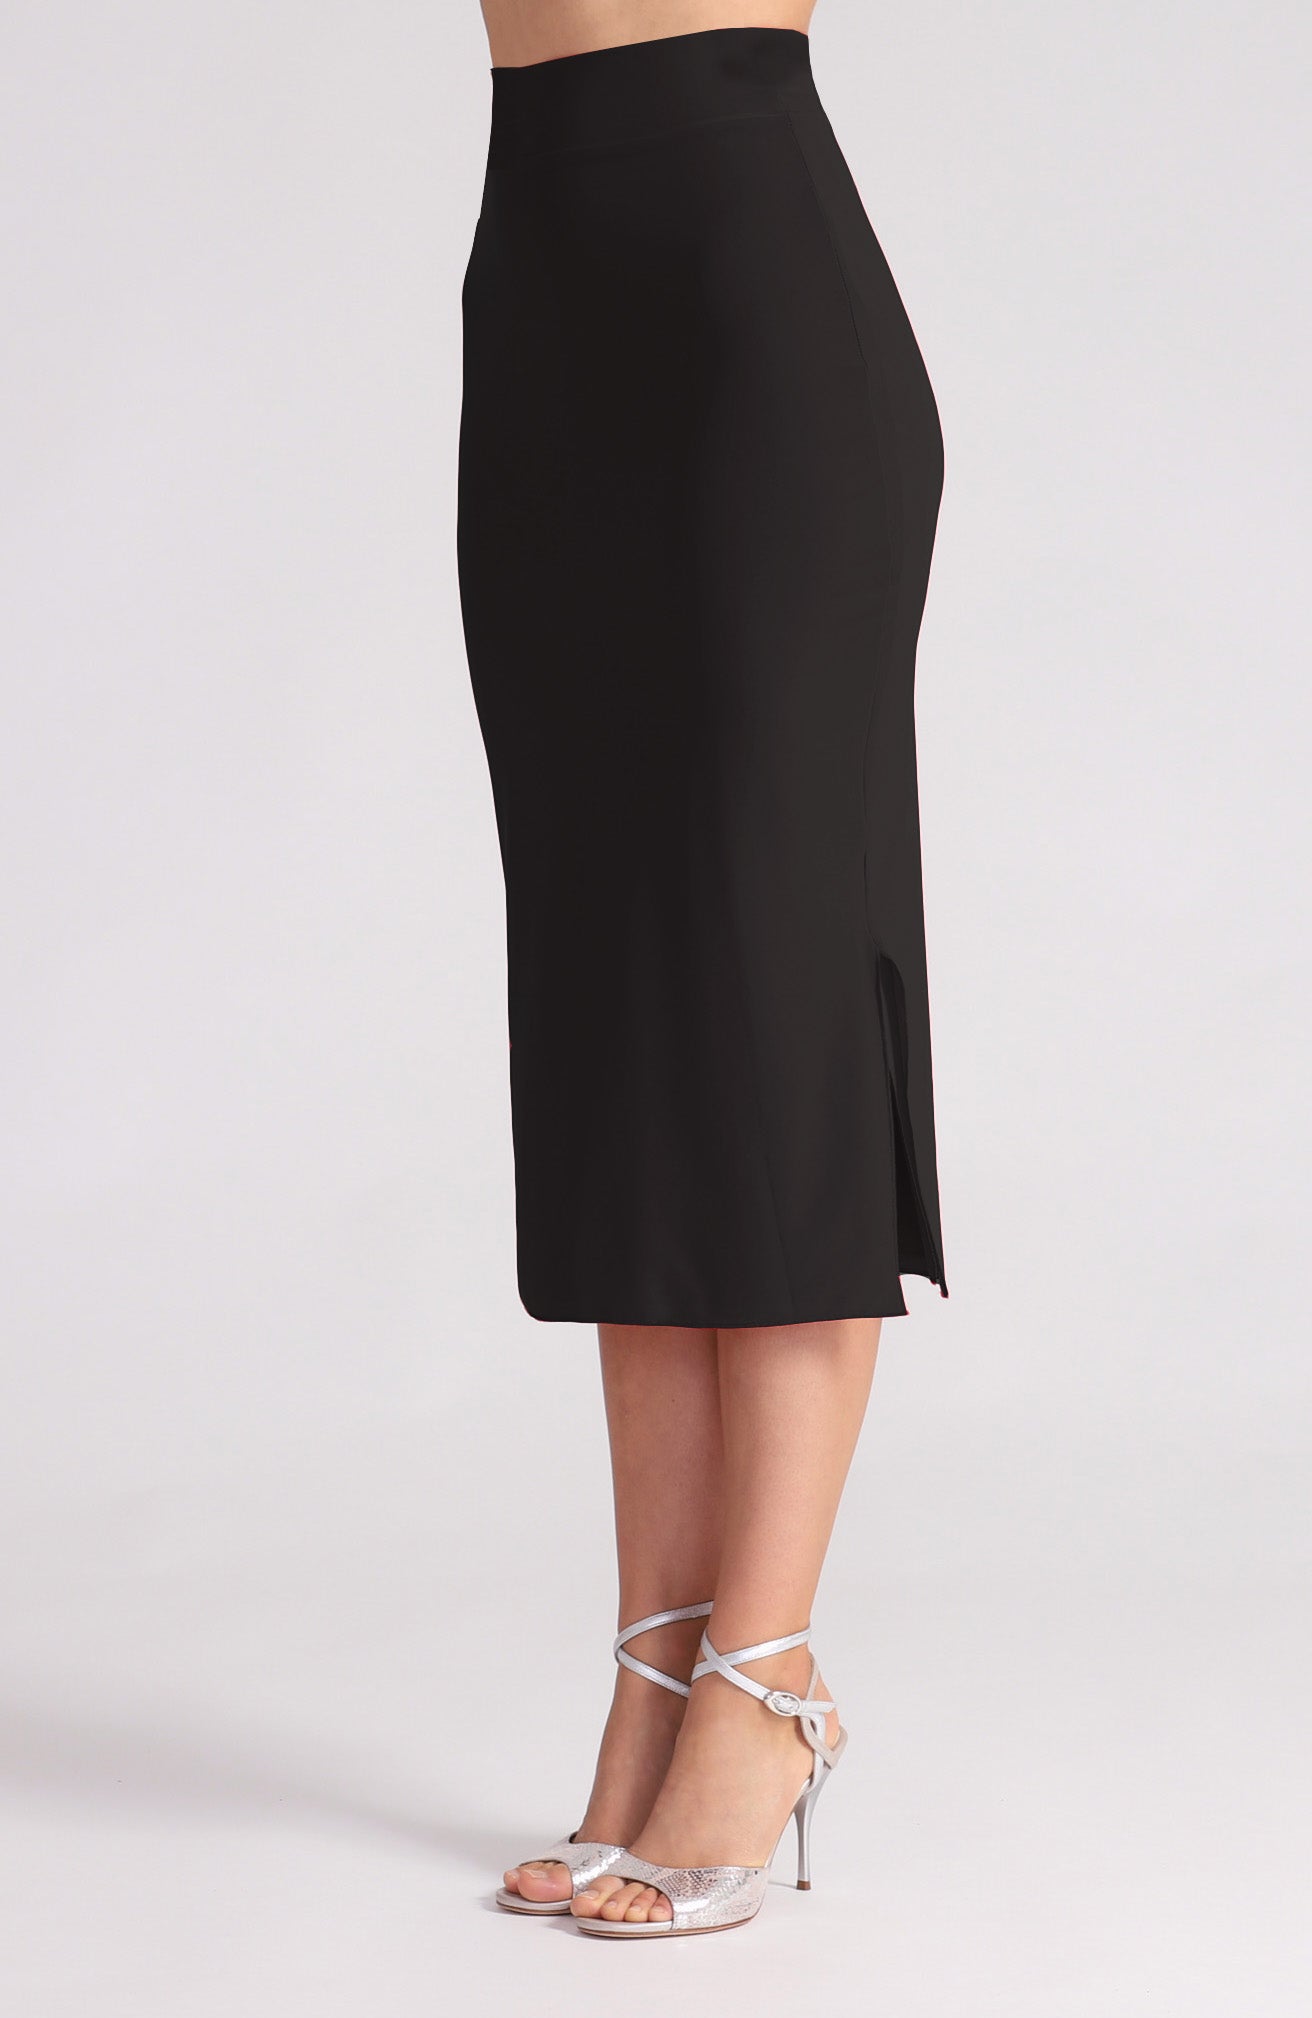 black pencil skirt with side slits